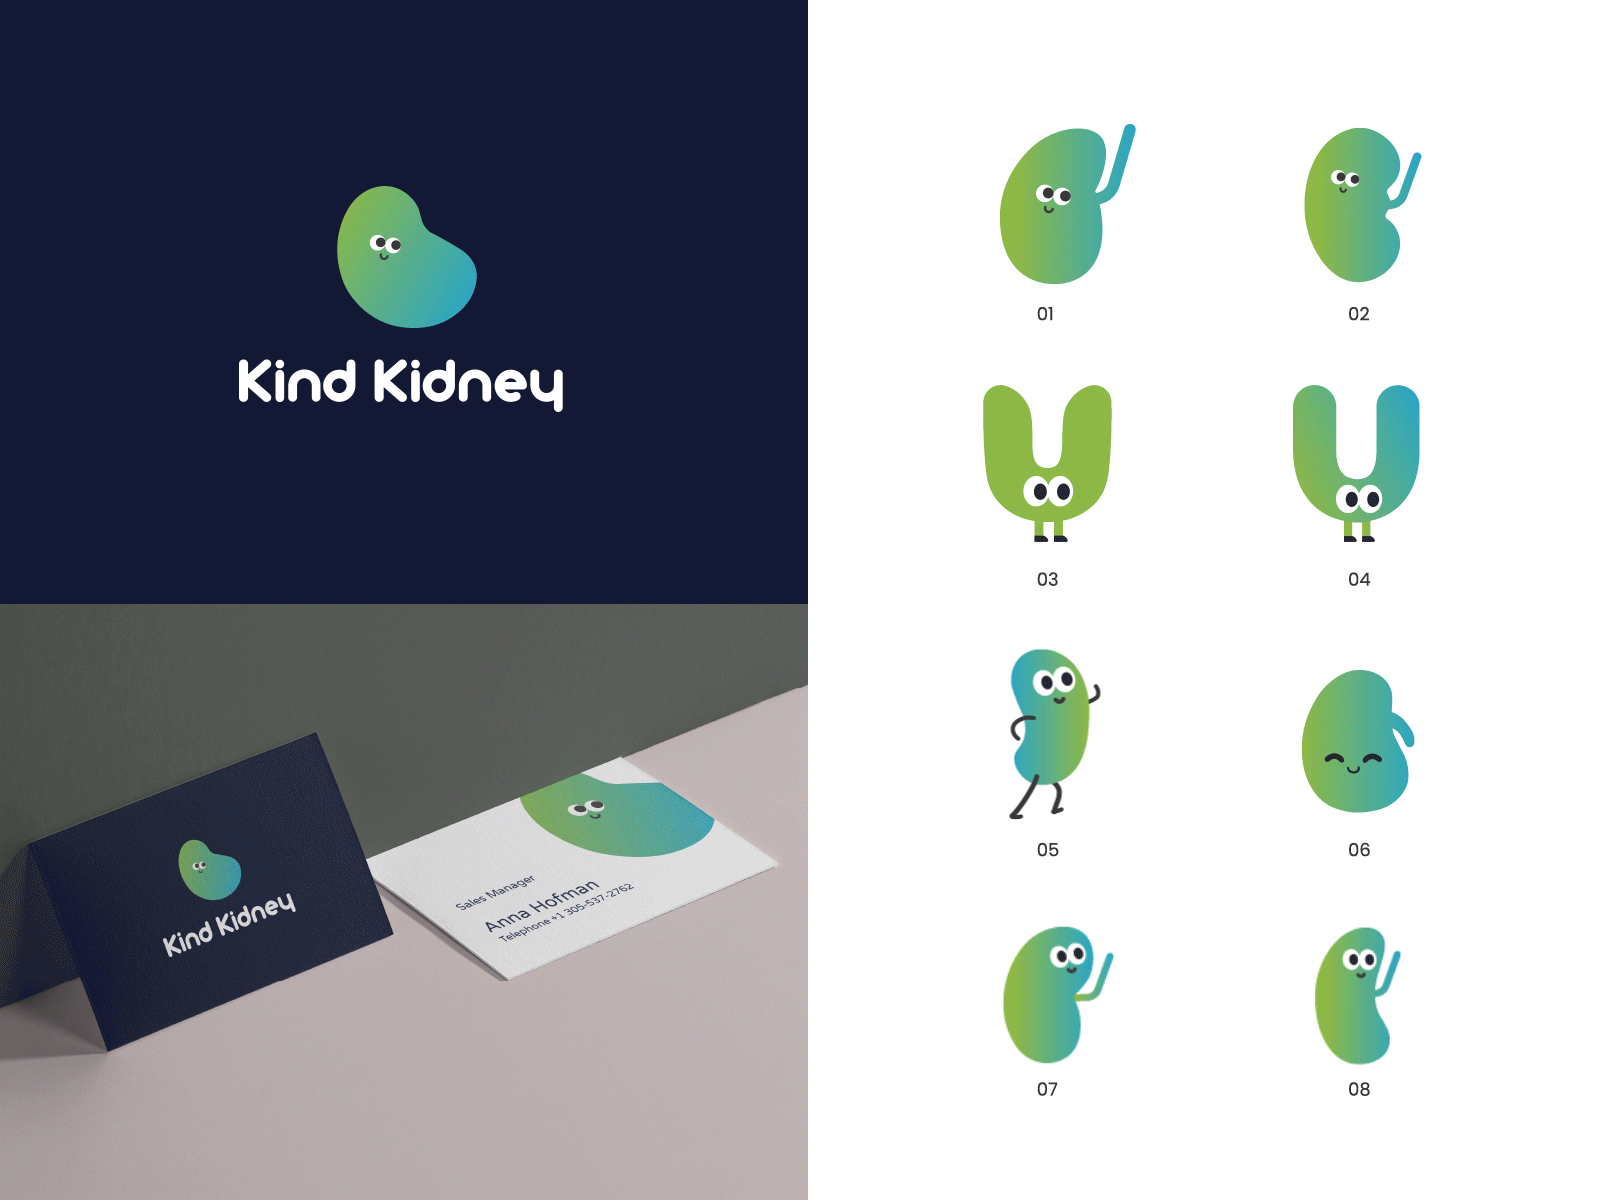 Kind Kidney